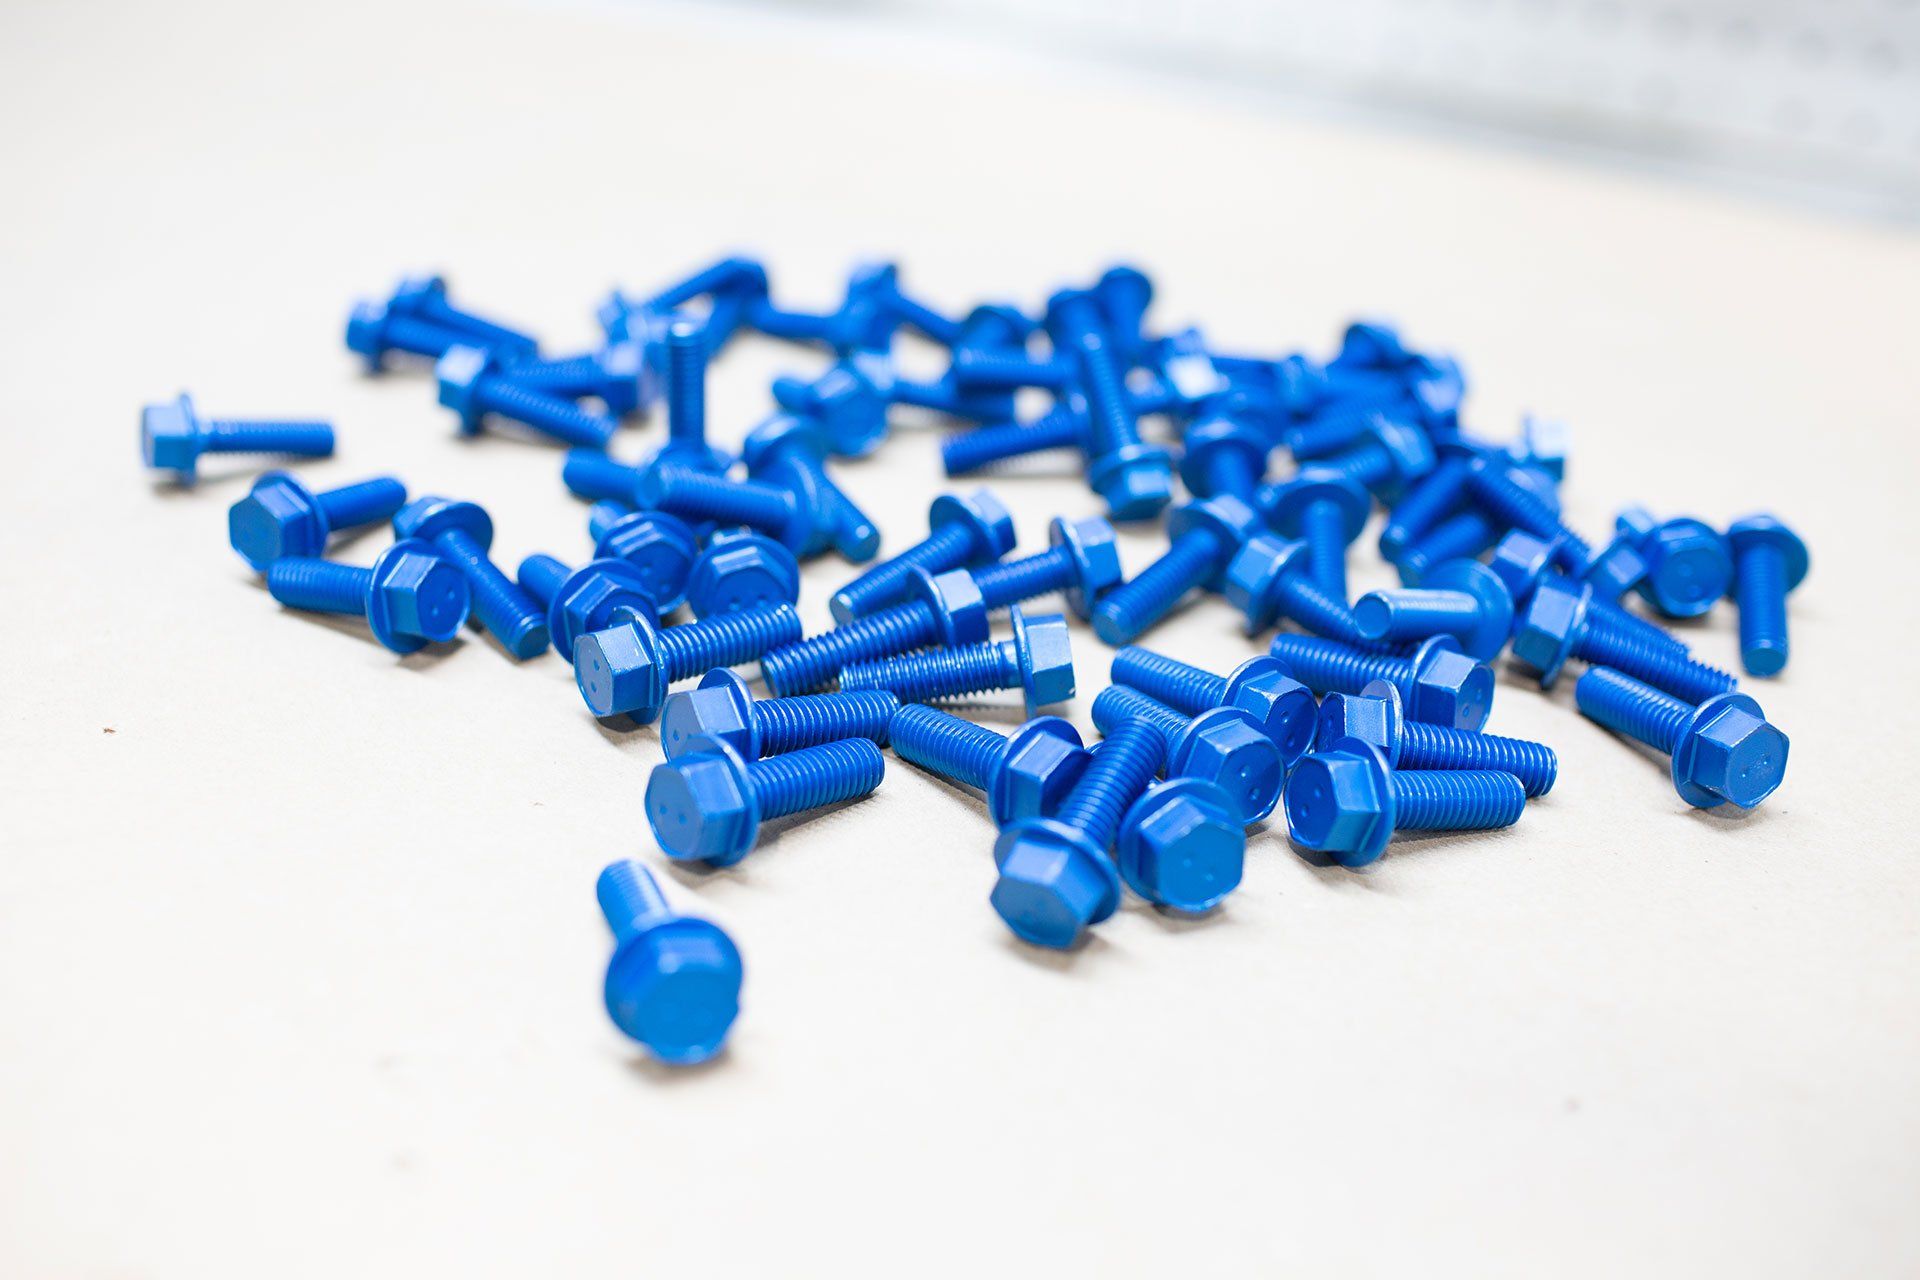 Blue anodized screws